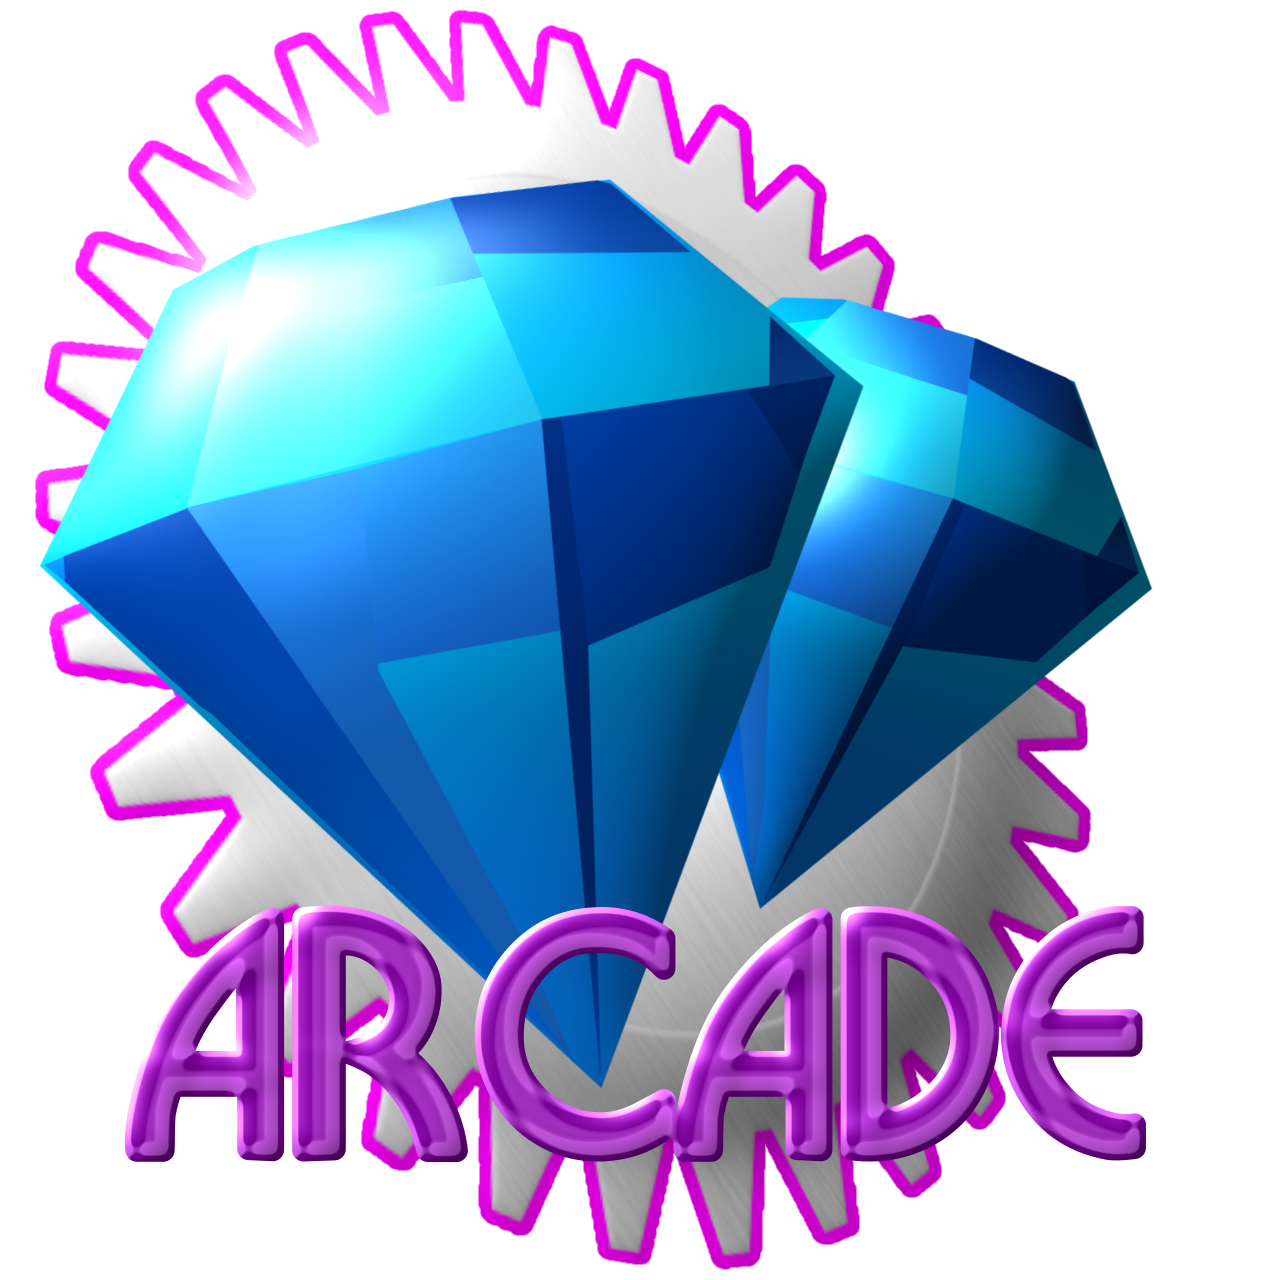 Bejeweled: Arcade